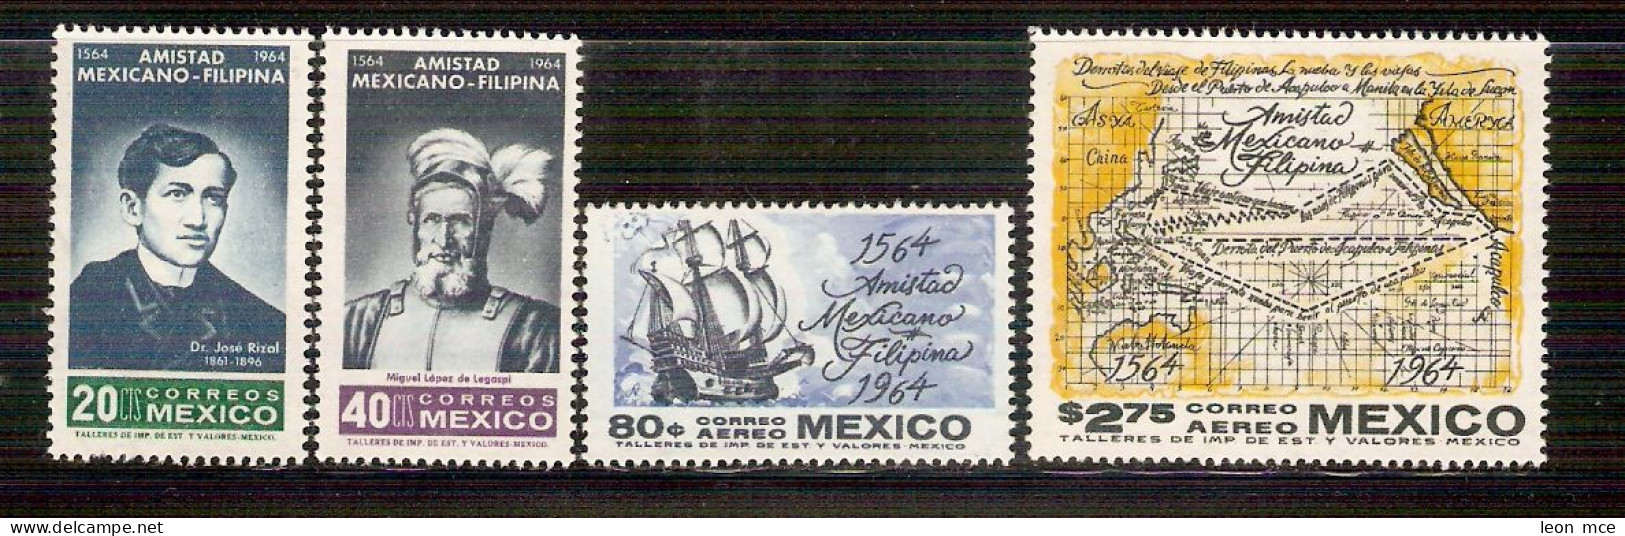 1964 MÉXICO 400 AÑOS AMISTAD MEX. FILIPINAS Sc. 956-957, C300-C301 (4) MNH. 400 YEARS OF MEXICO-PHILIPPINES FRIENDSHIP - México